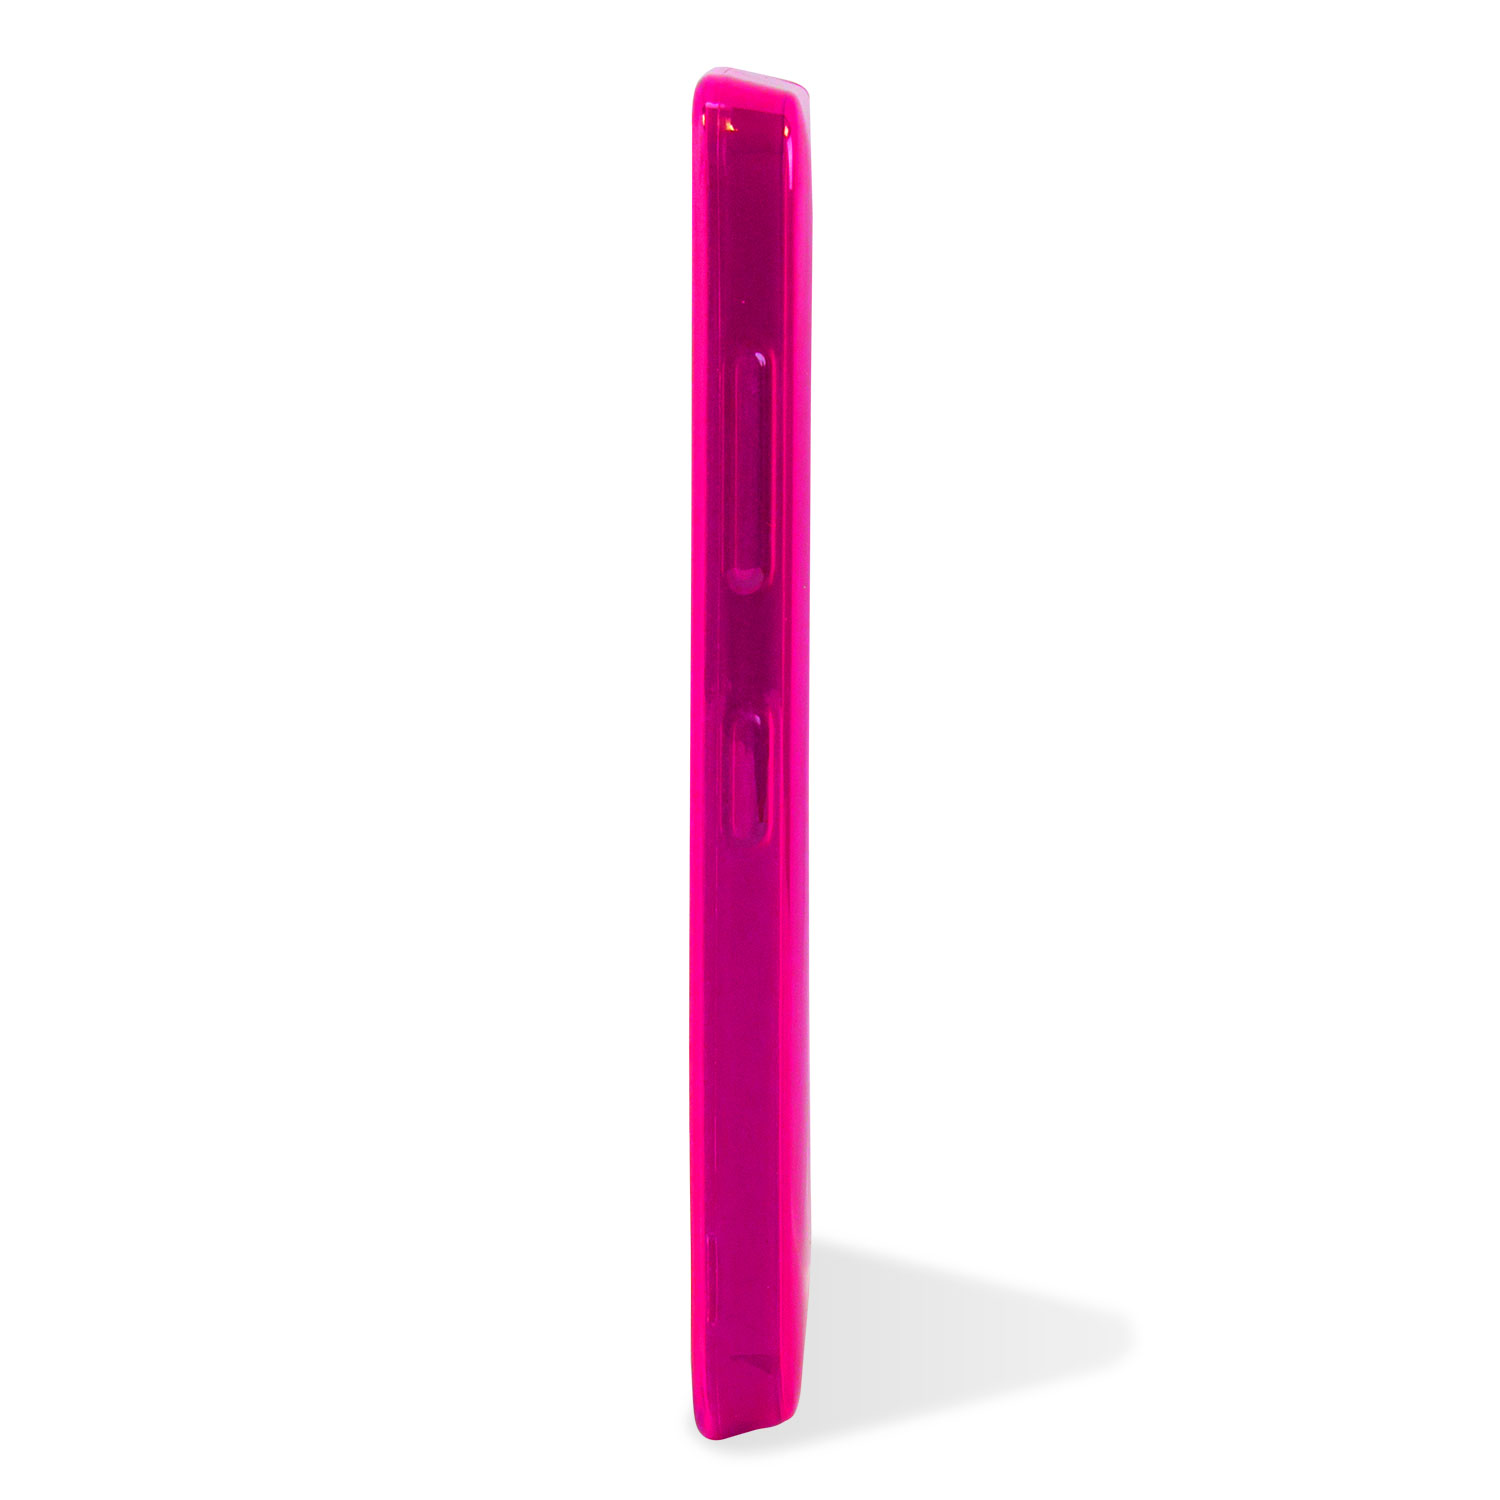 Flexishield Nokia Lumia 635 / 630 Gel Case - Hot Pink